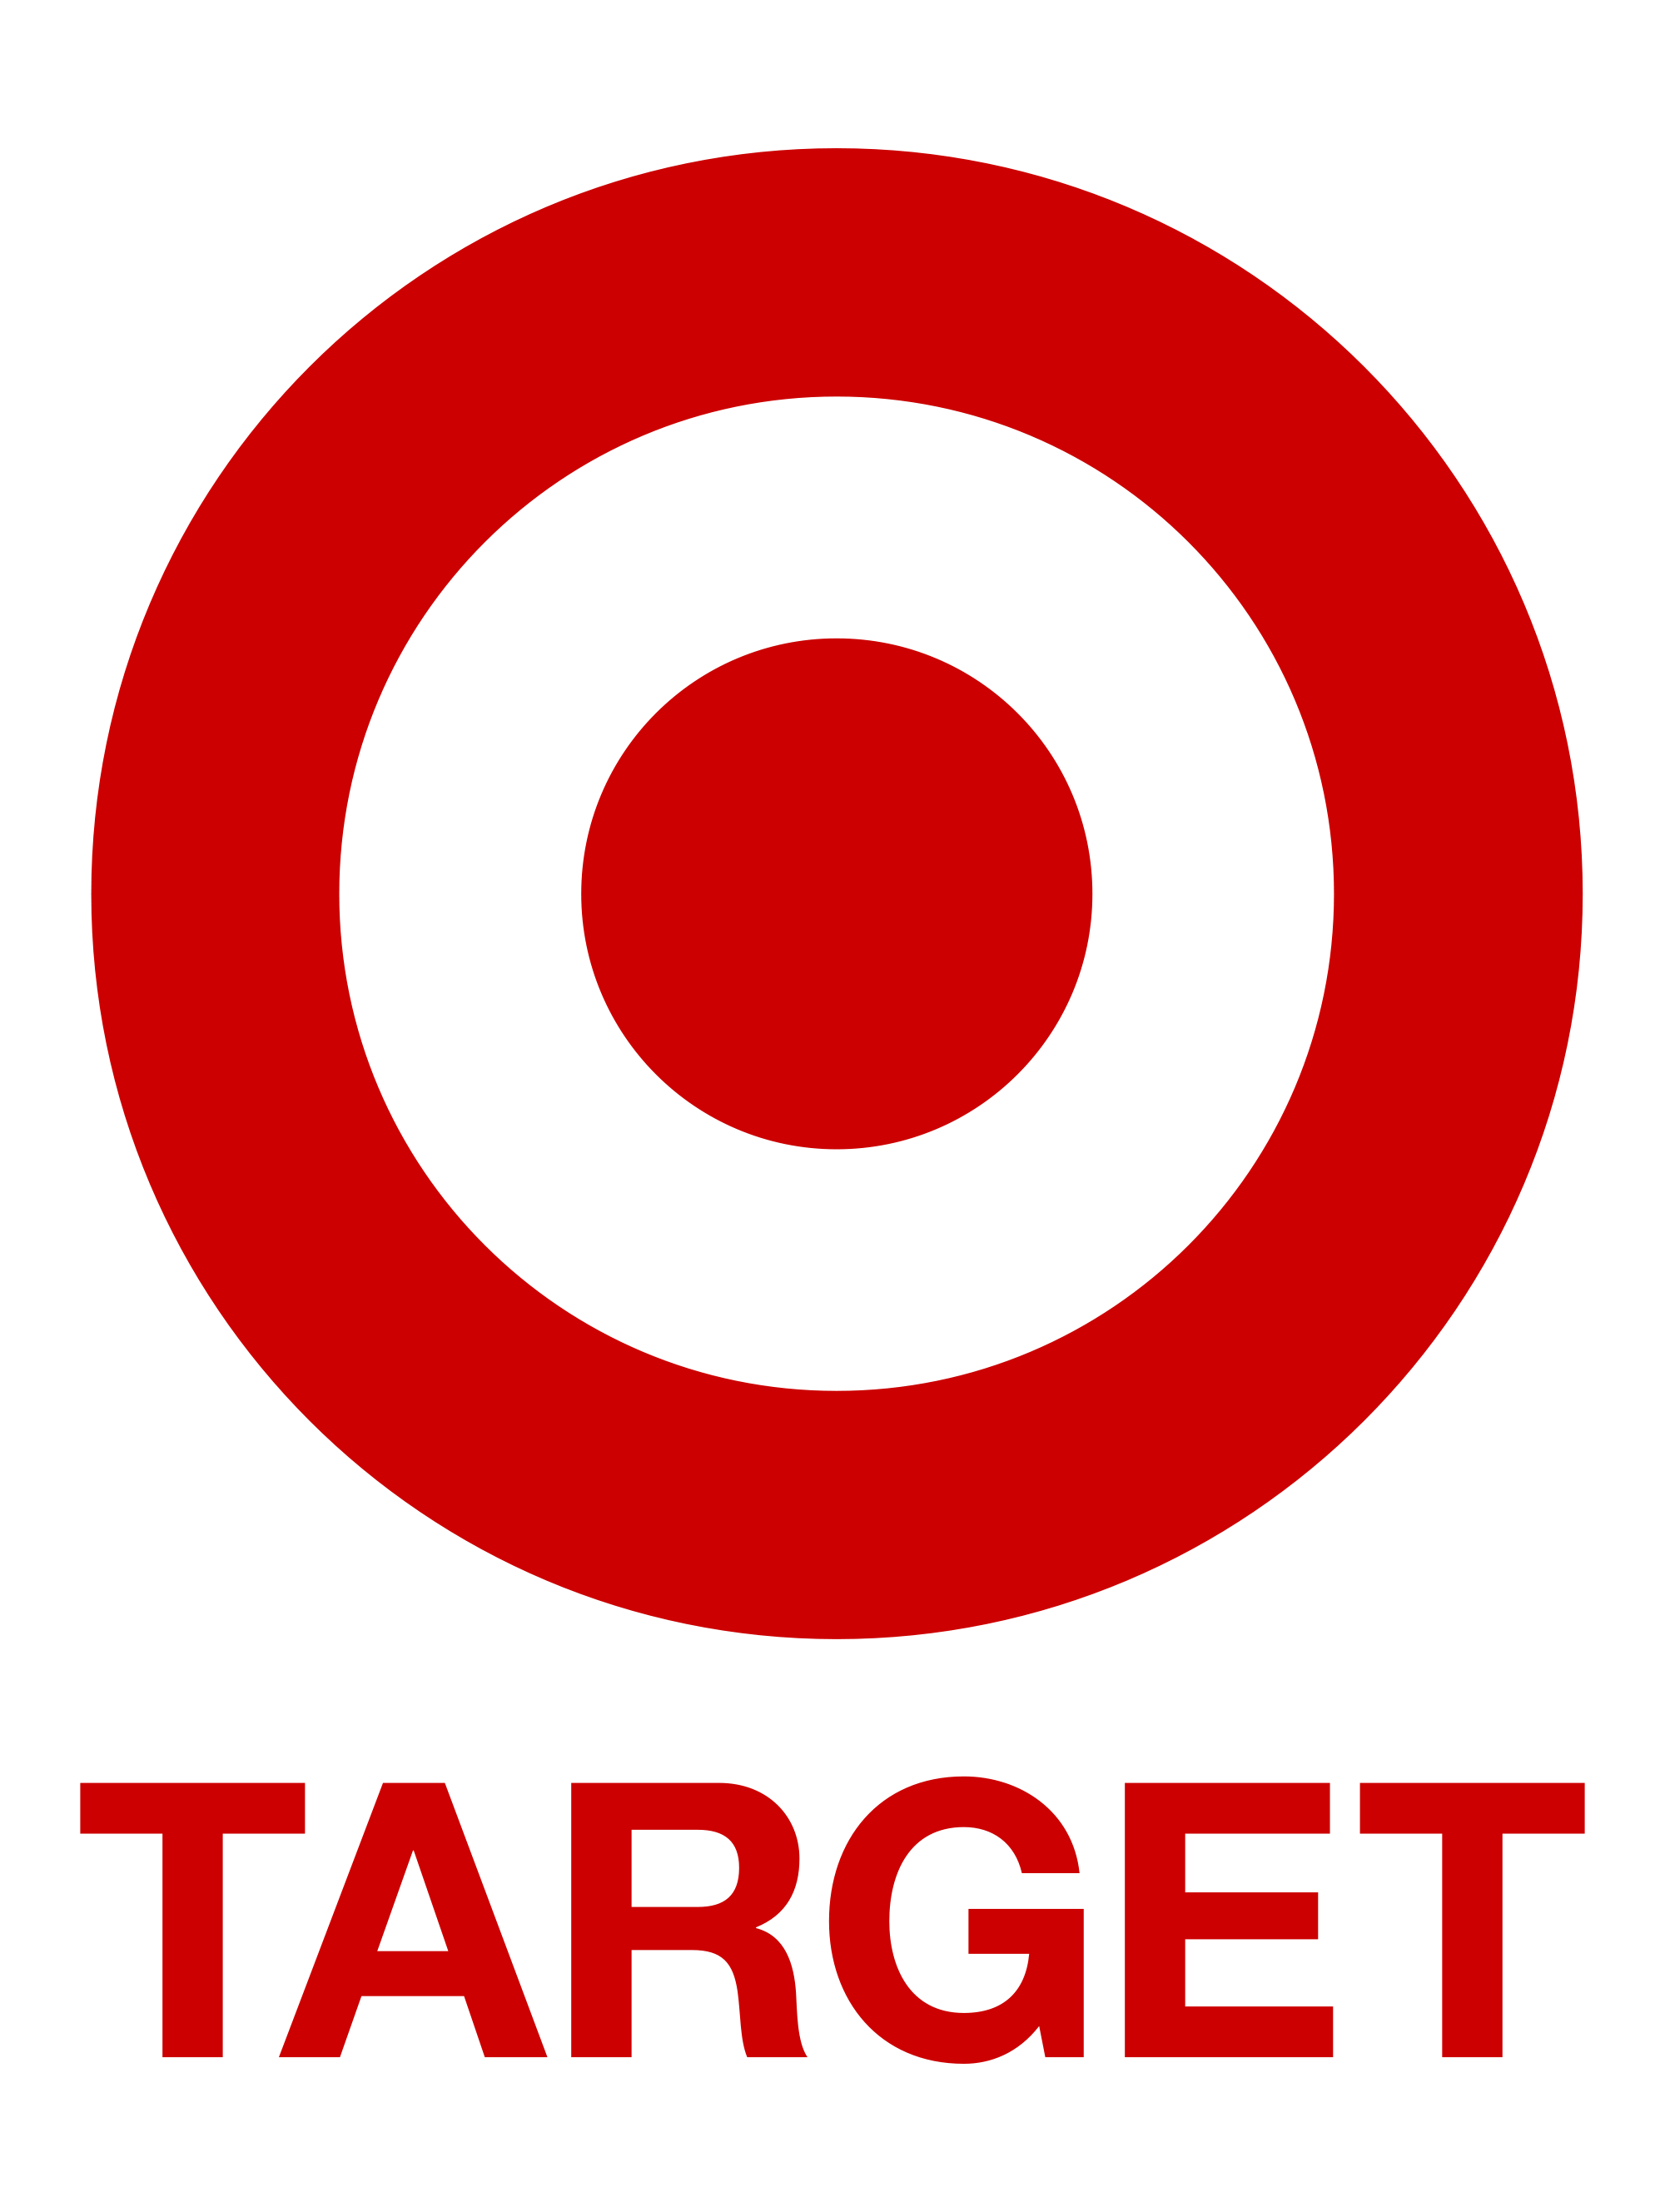 Target Corporation - Wikipedia, the free encyclopedia